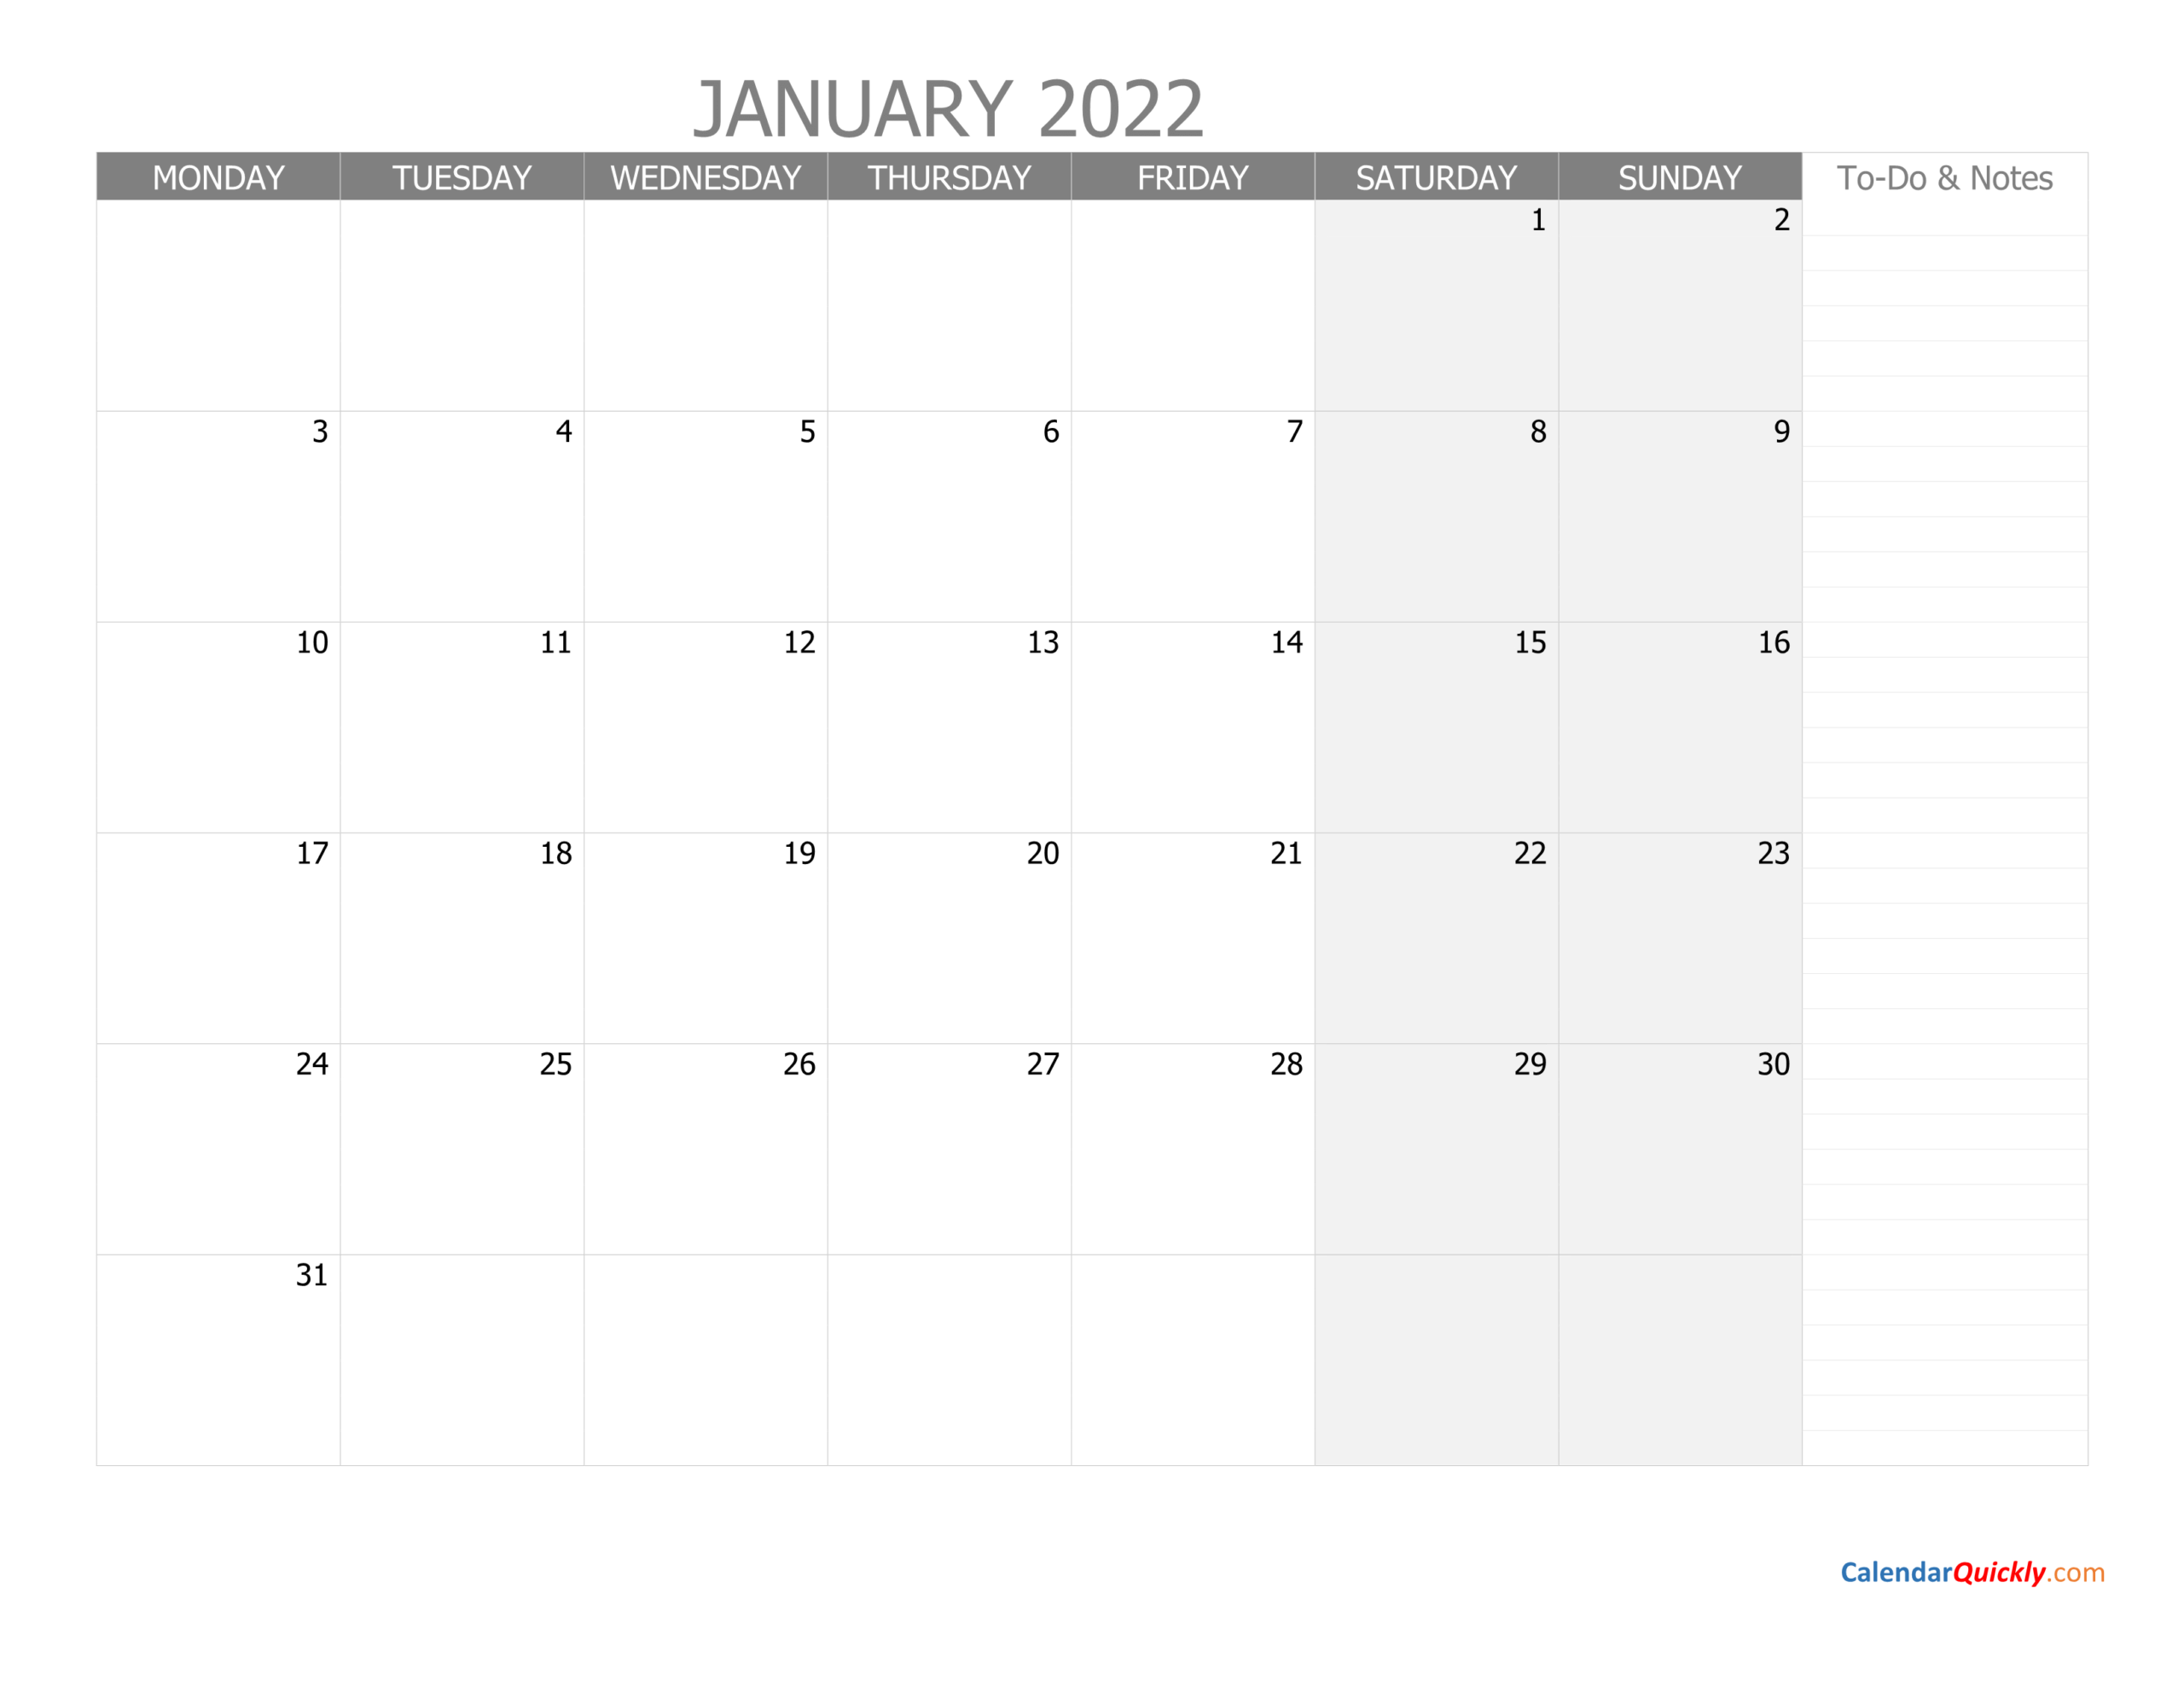 January Monday Calendar 2022 With Notes | Calendar Quickly  Dec And Jan 2022 Calendar